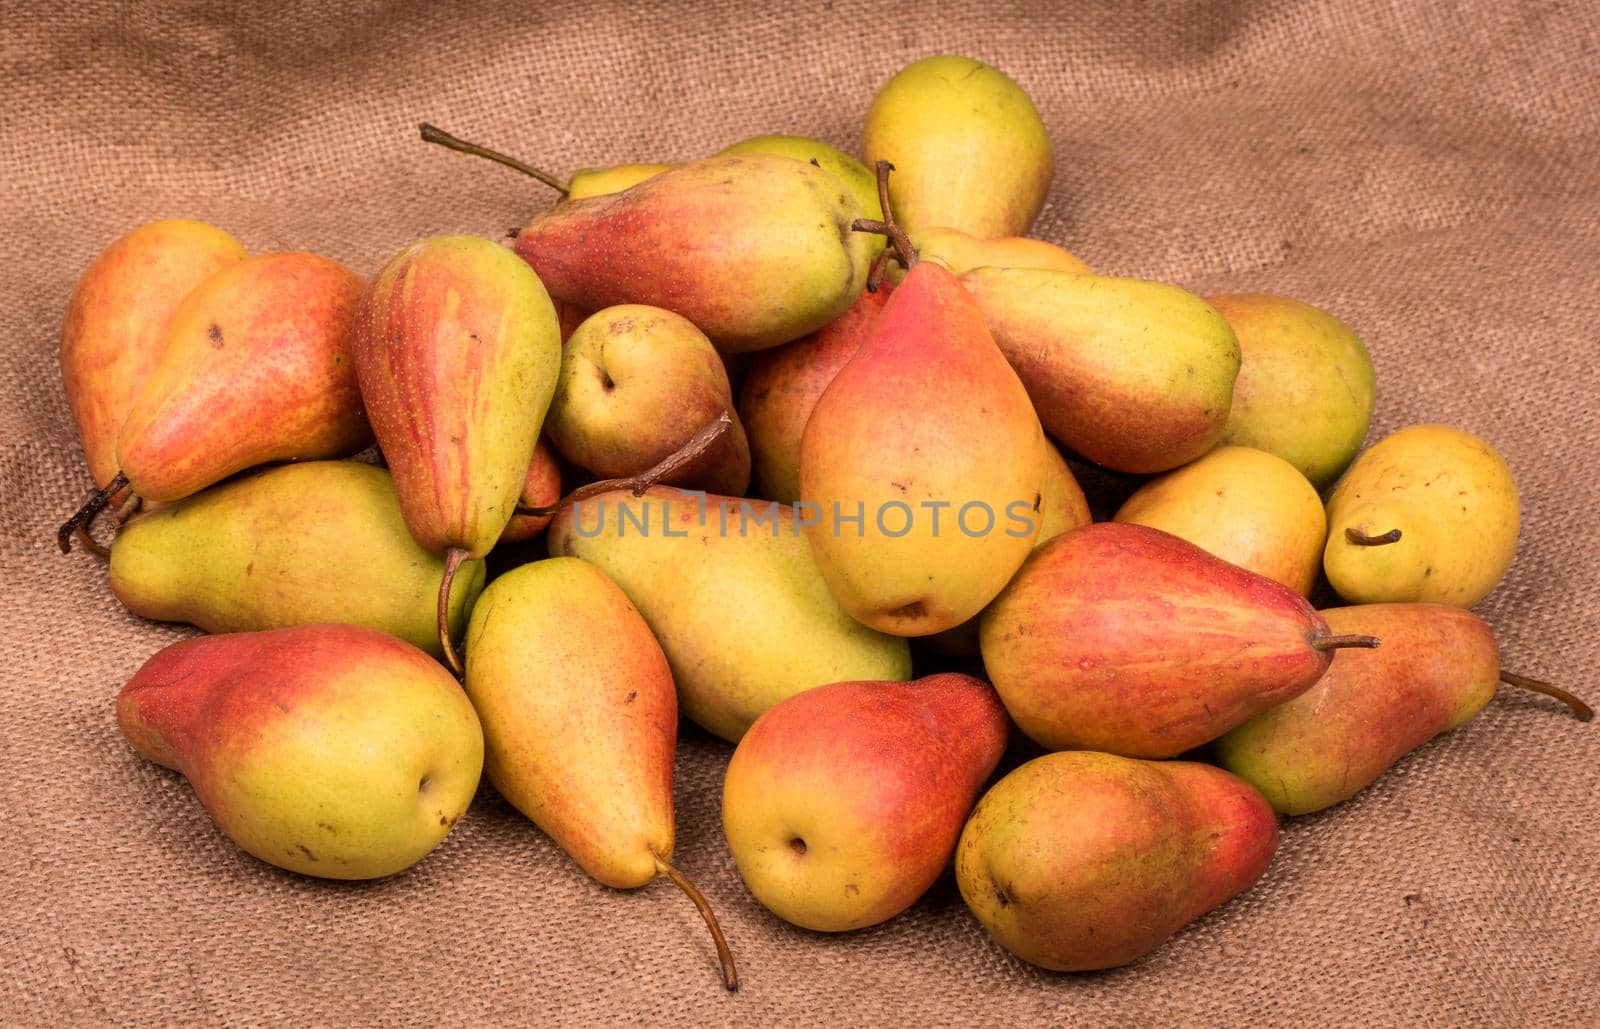 Big pile of fresh pears lying on sacking